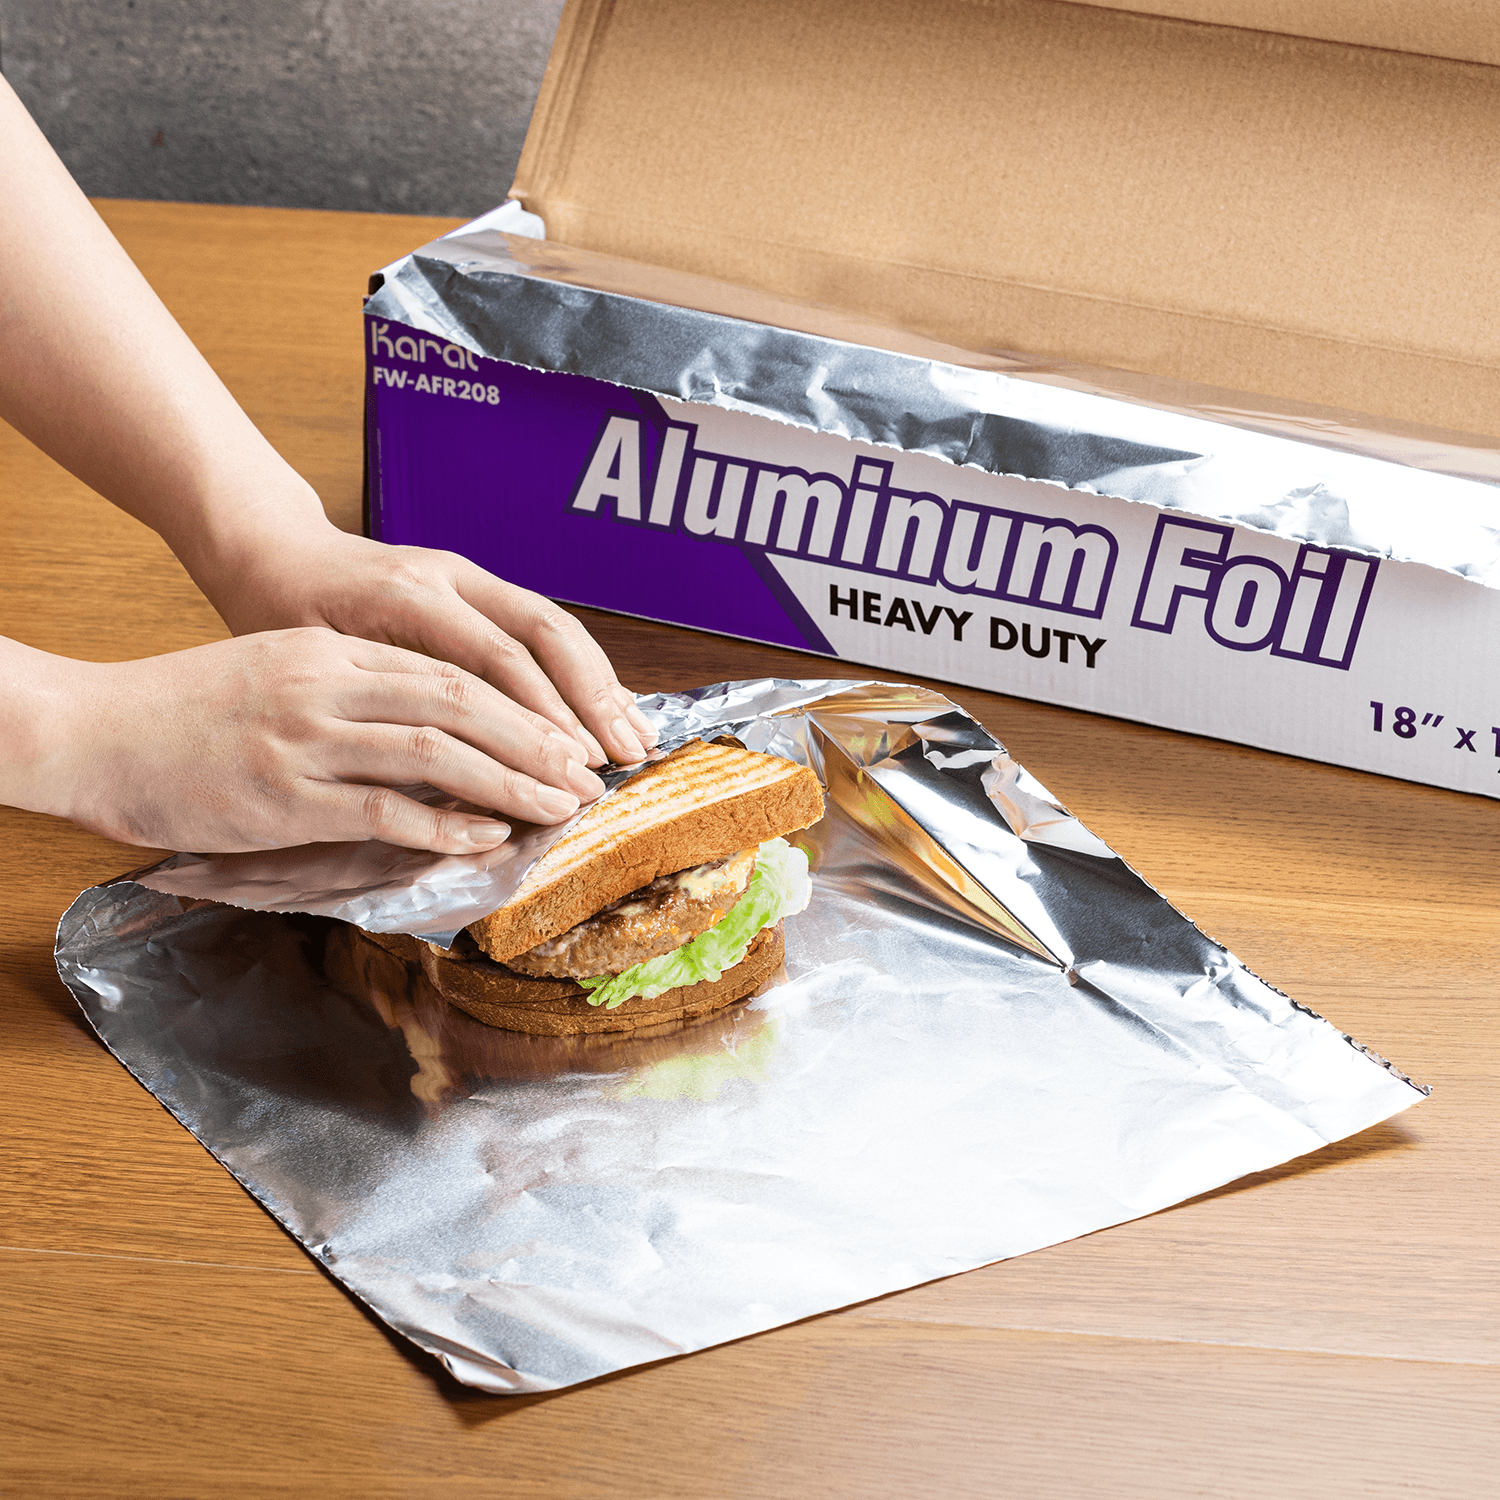 Karat 18” x 1000' Heavy Duty Aluminum Foil Roll wrapping food